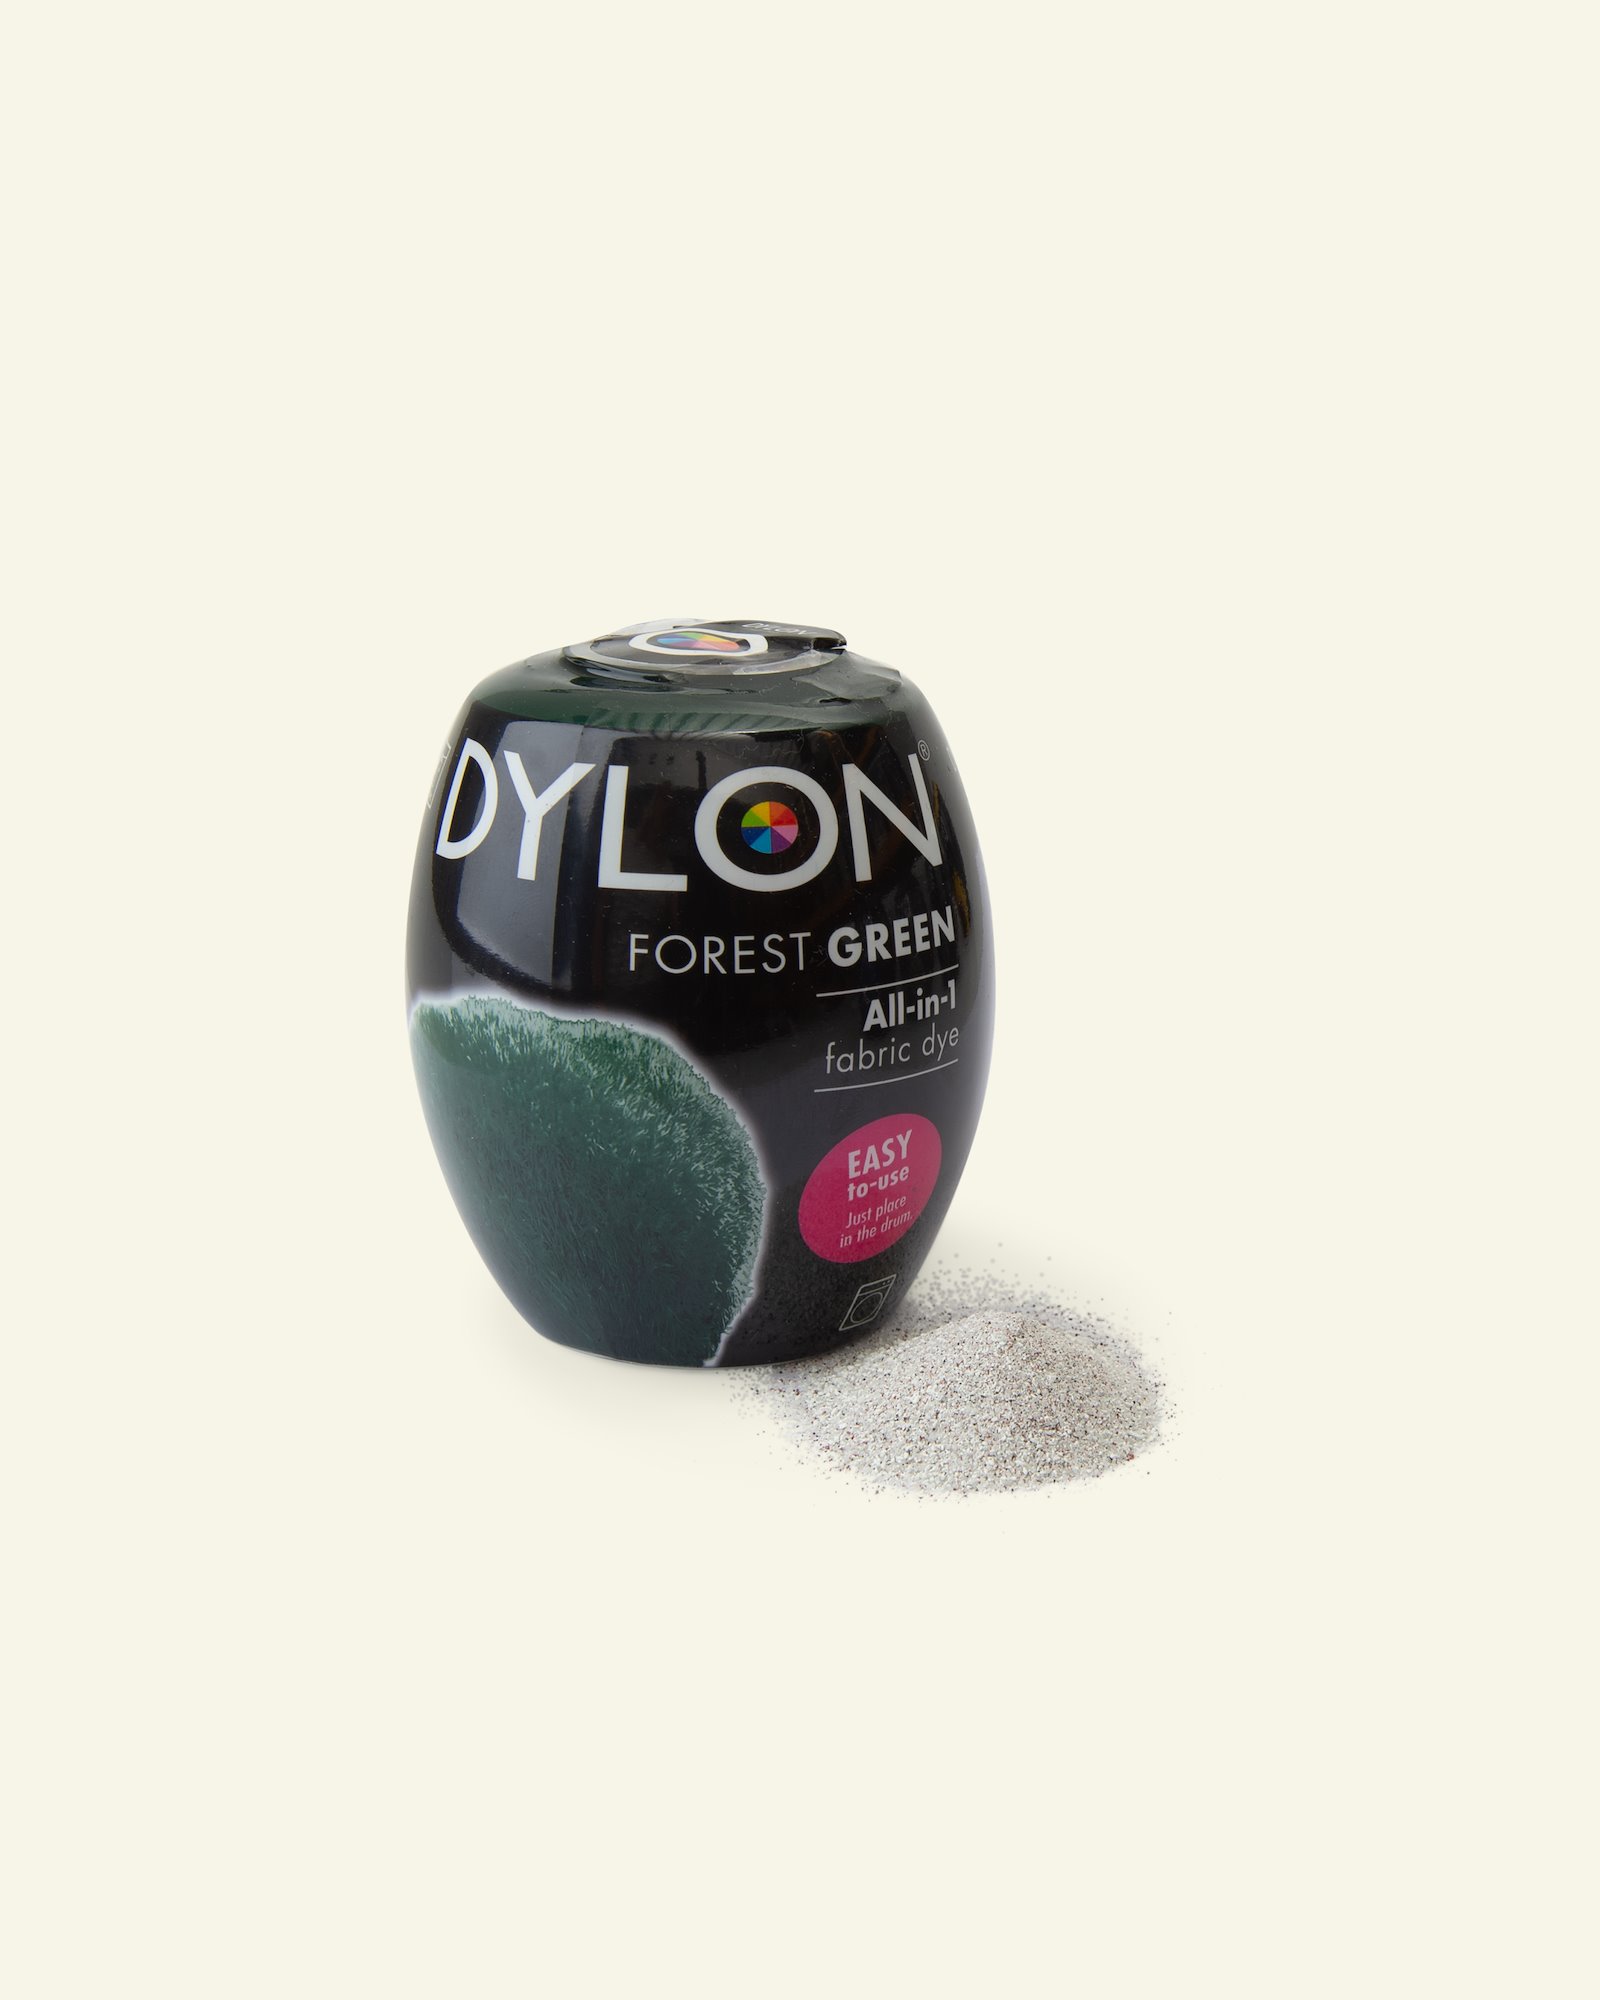 Dylon fabric dye for machine dark green 29704_pack